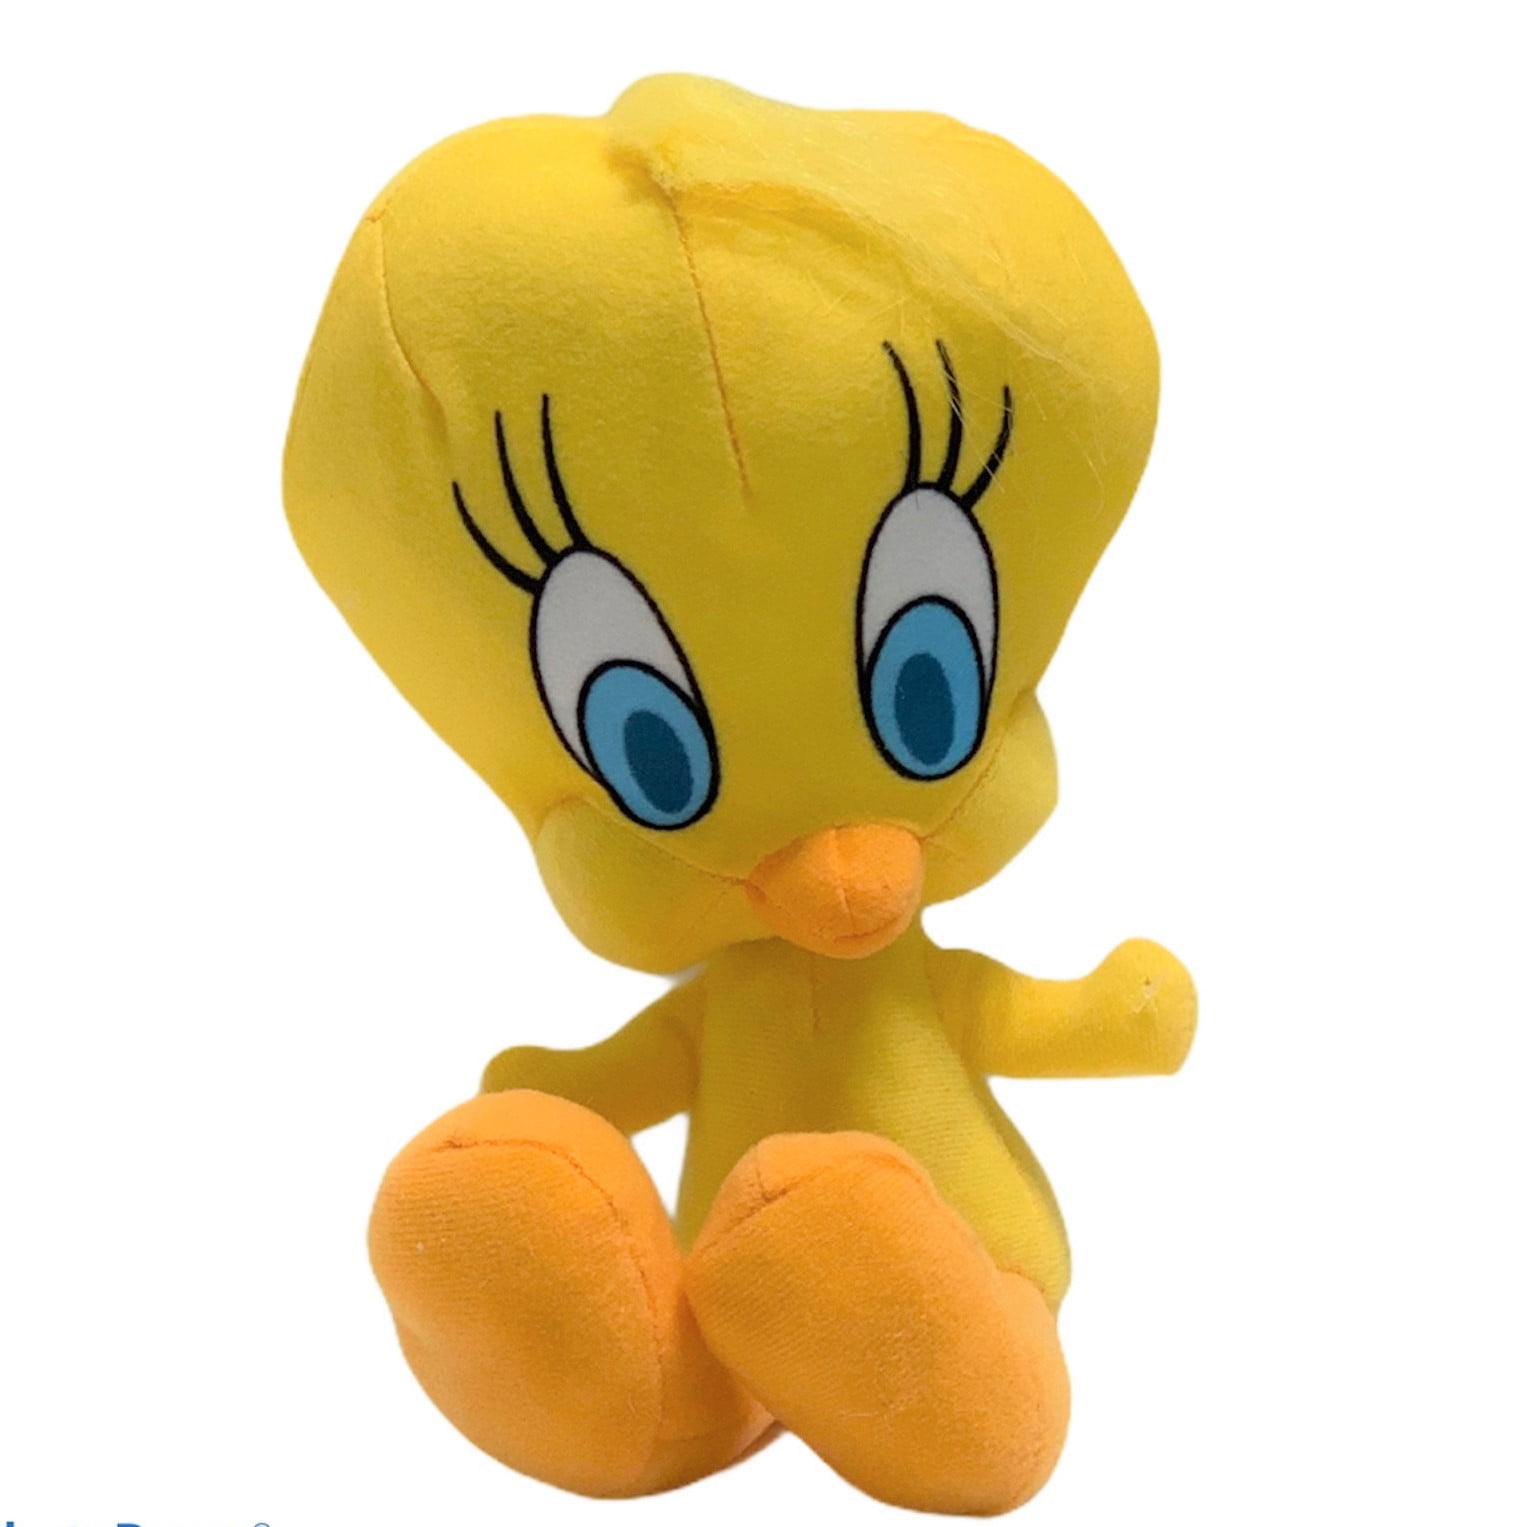 Stuffed Tweety Bird or Crackle from Rice Krispies Stuffed Characters 